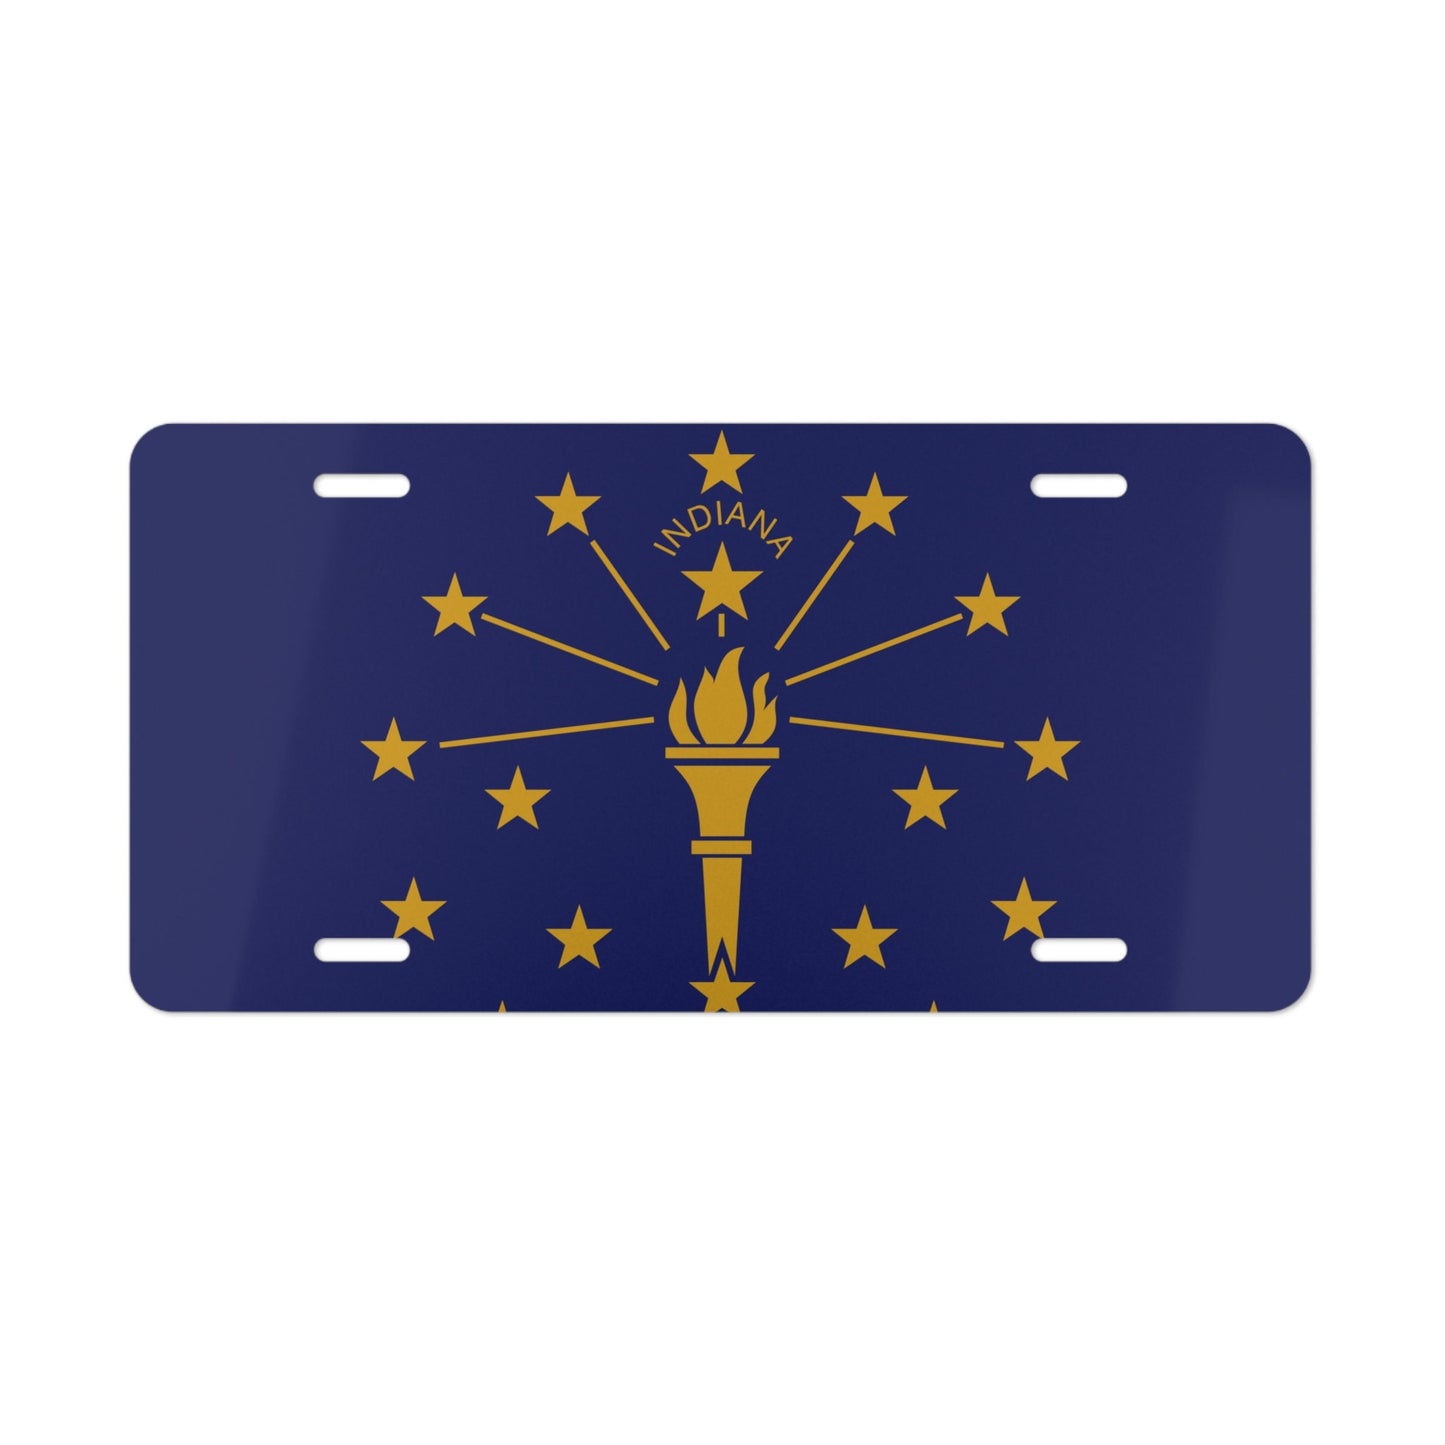 Indiana Flag Car Plate tag